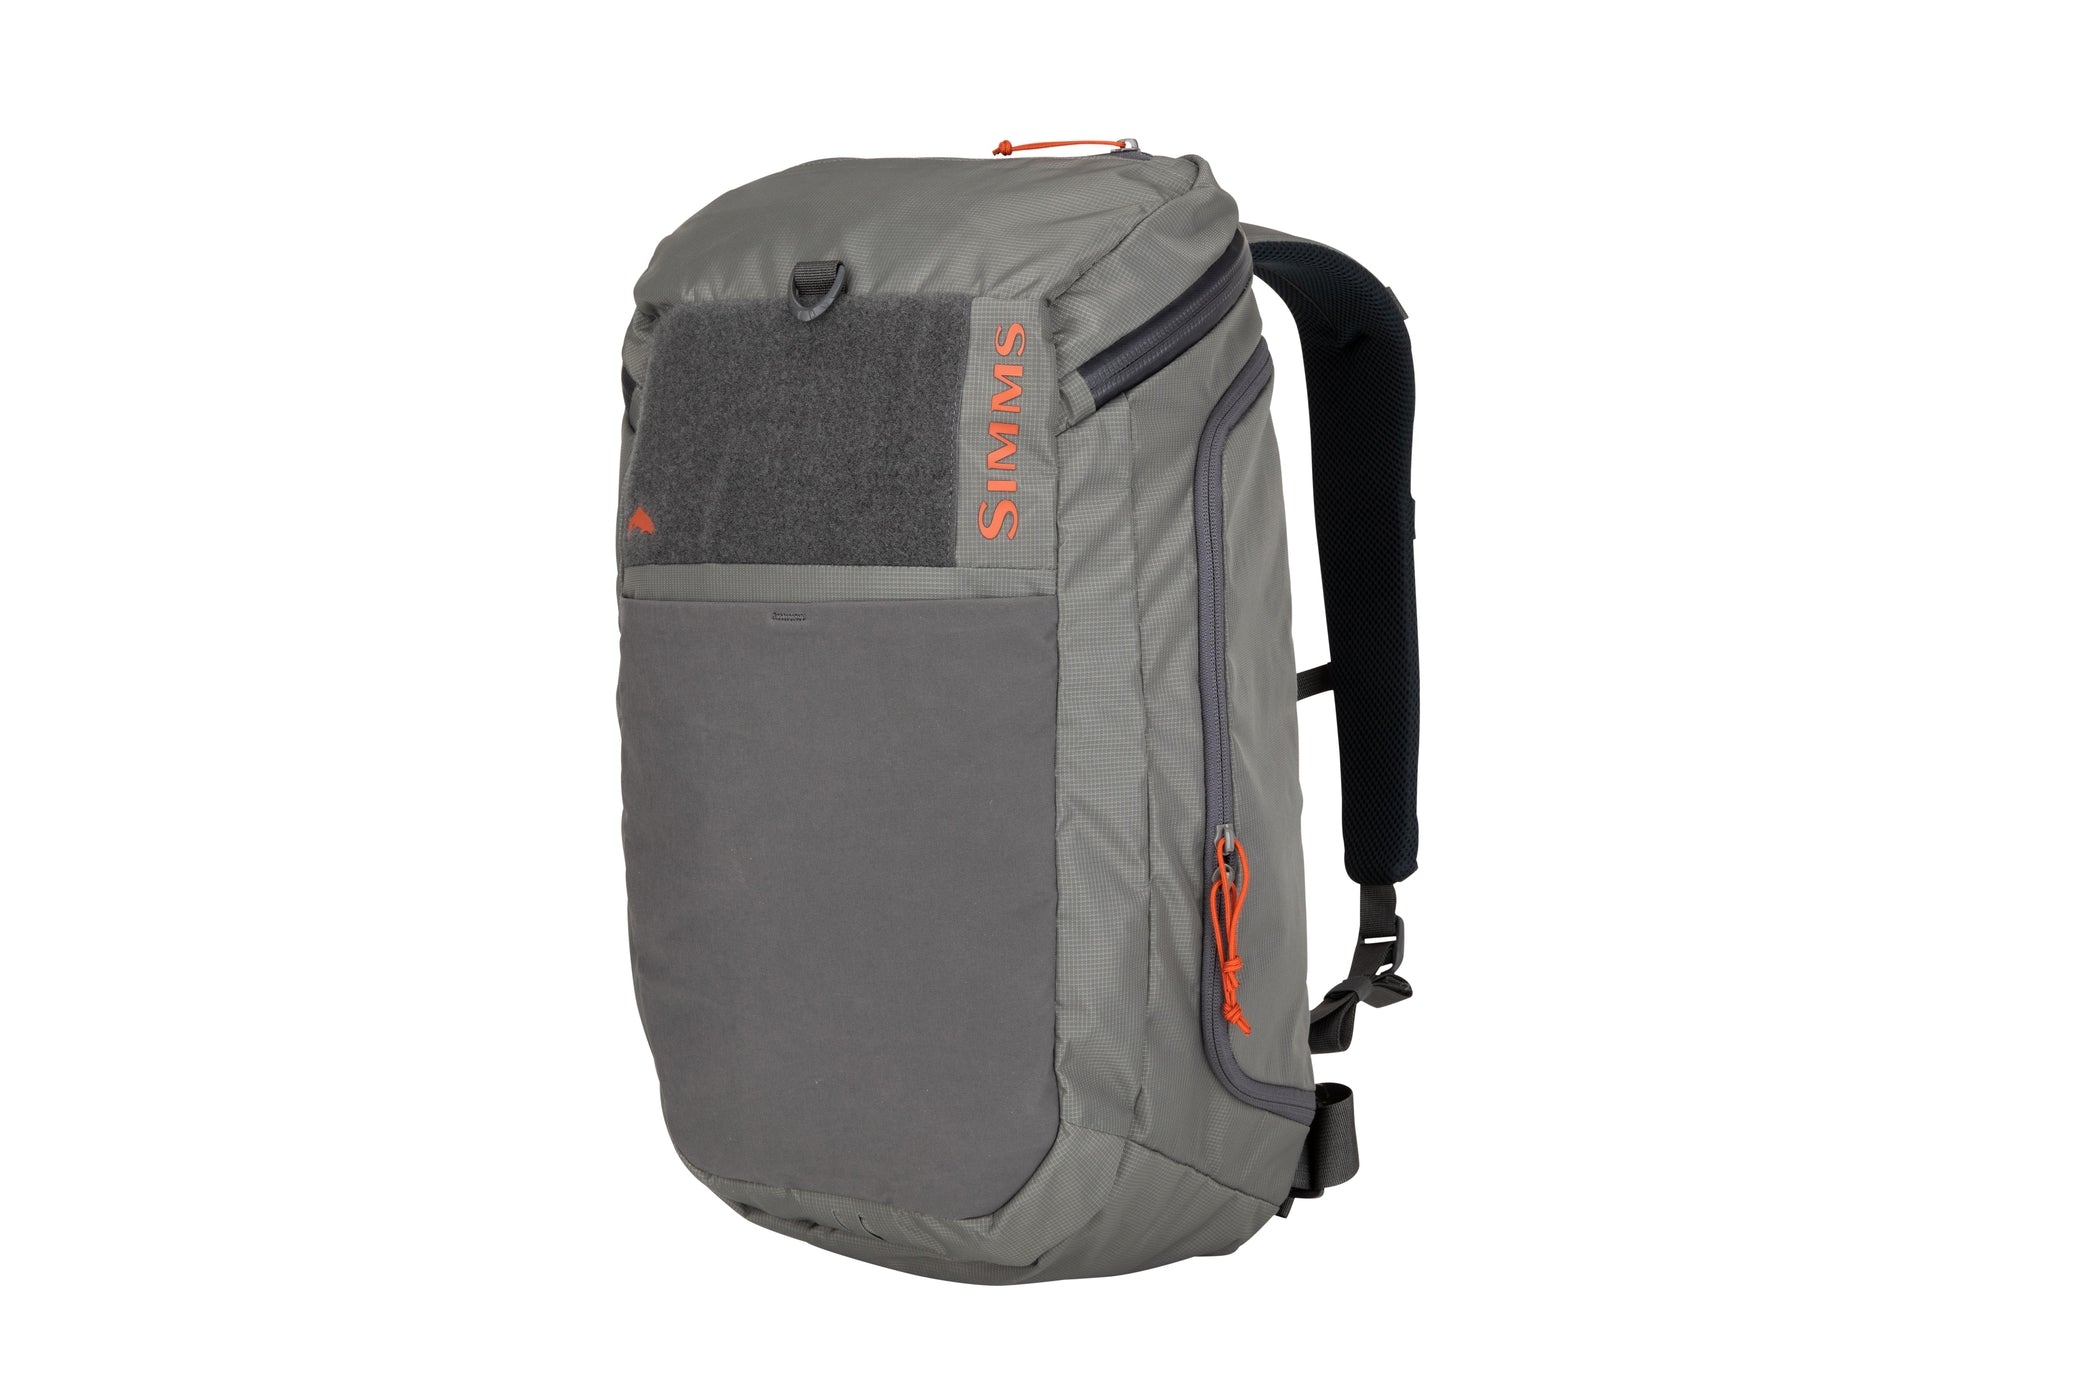 Bags + Packs - Packs - Simms Chest Pack, Dry Creek, Flyweight